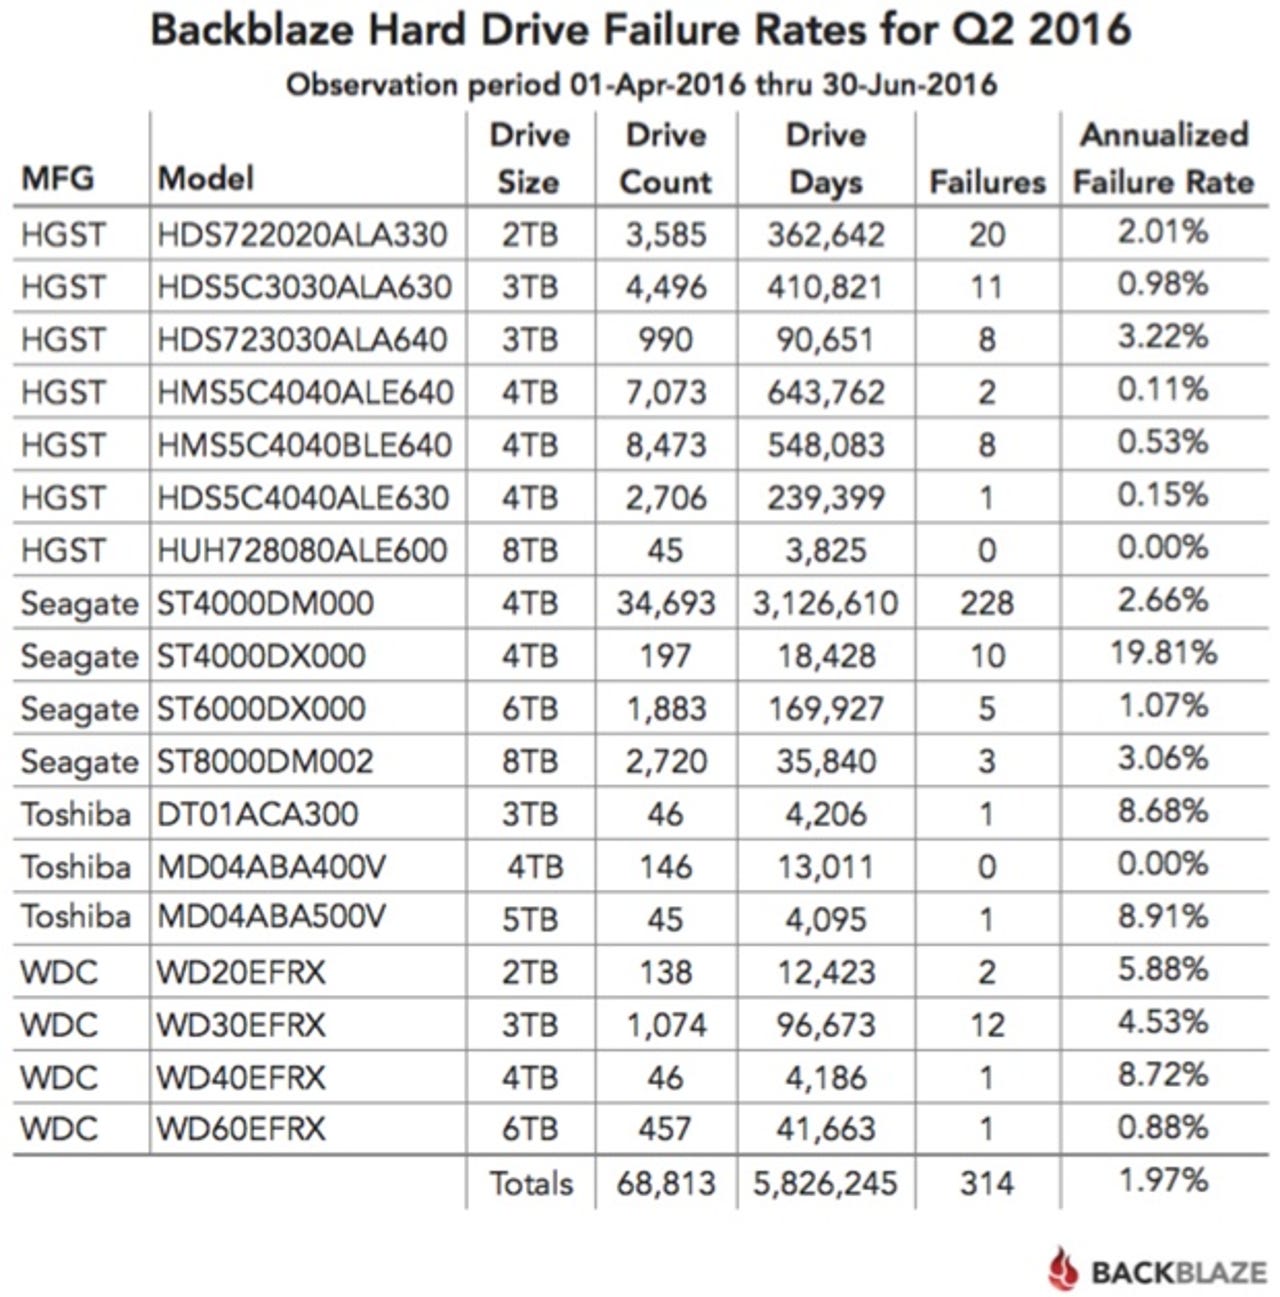 Backblaze highlights most reliable hard drive models